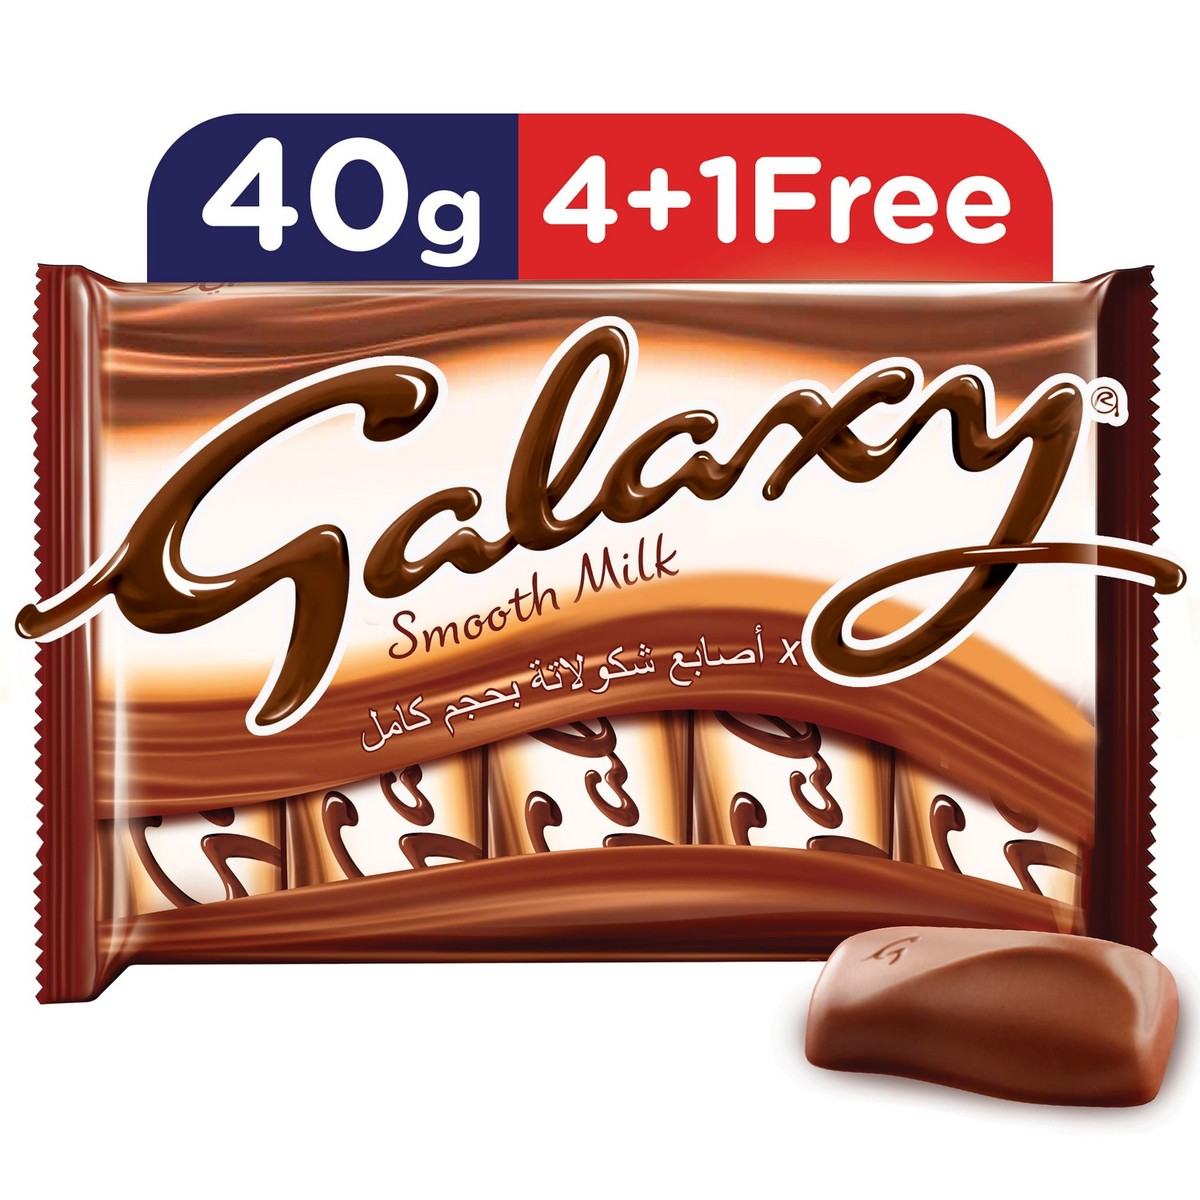 Galaxy Smooth Milk Chocolate Bars 40g x 5pcs